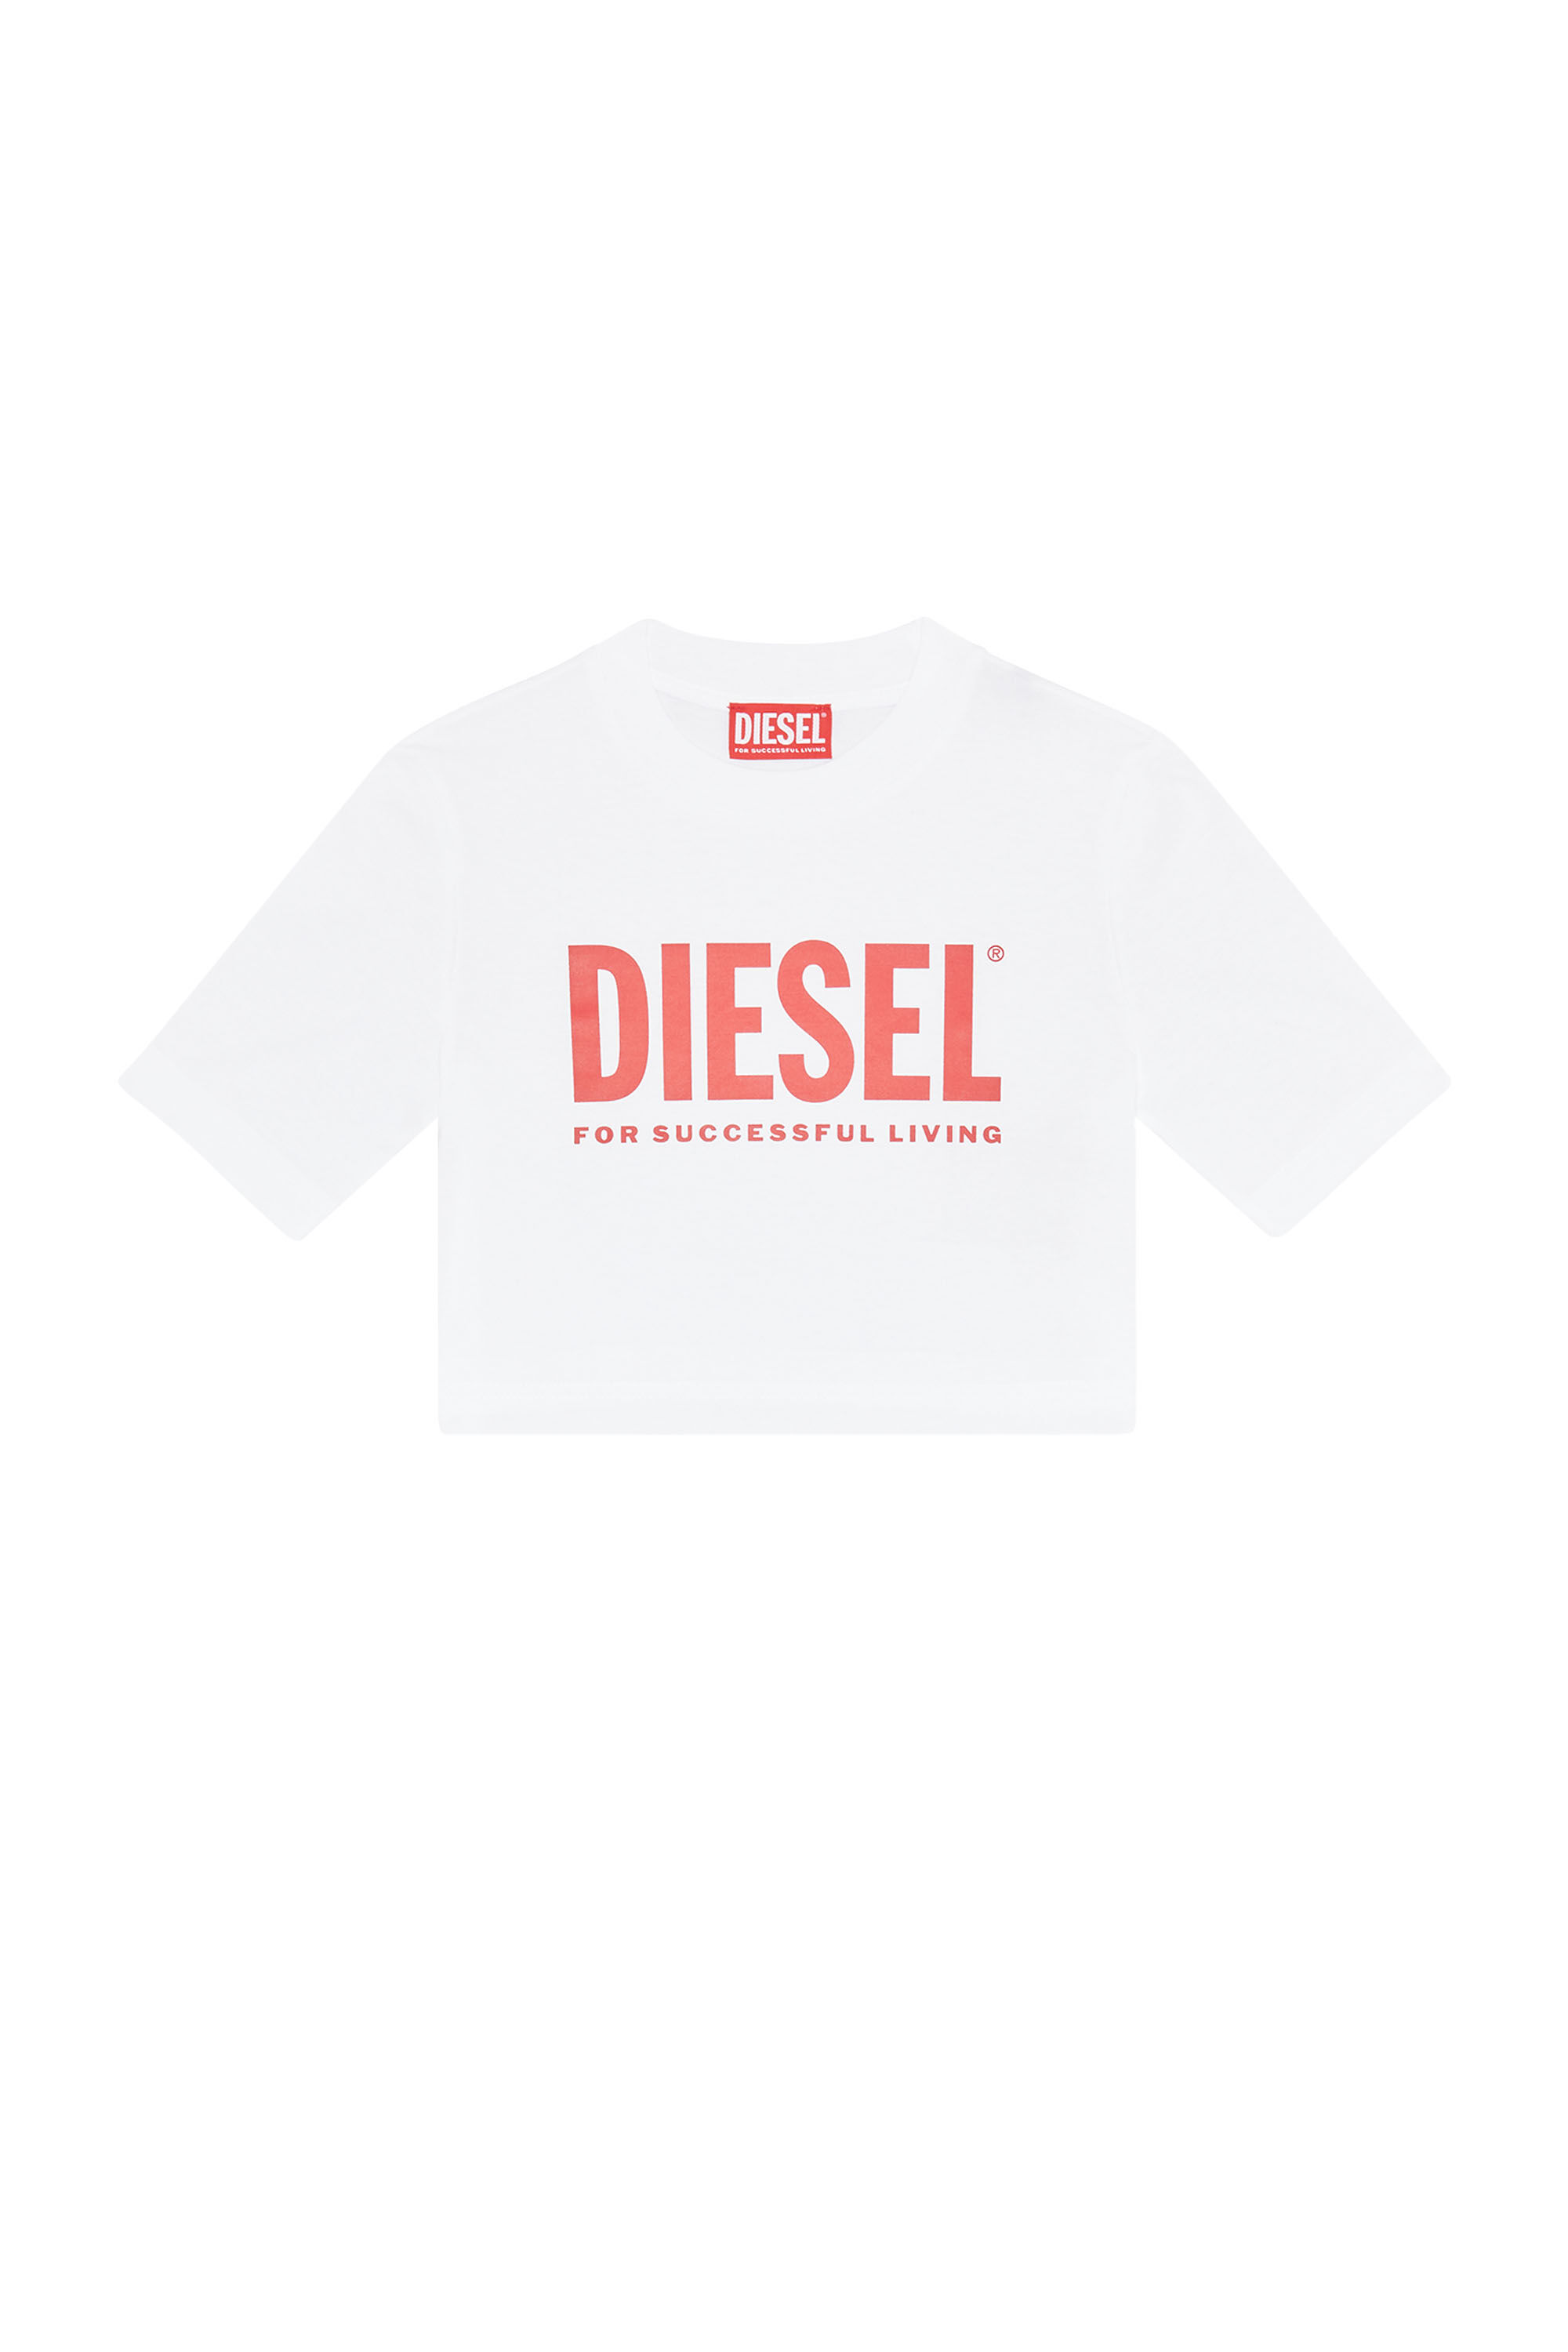 Diesel - TRECROWLOGO, White - Image 1